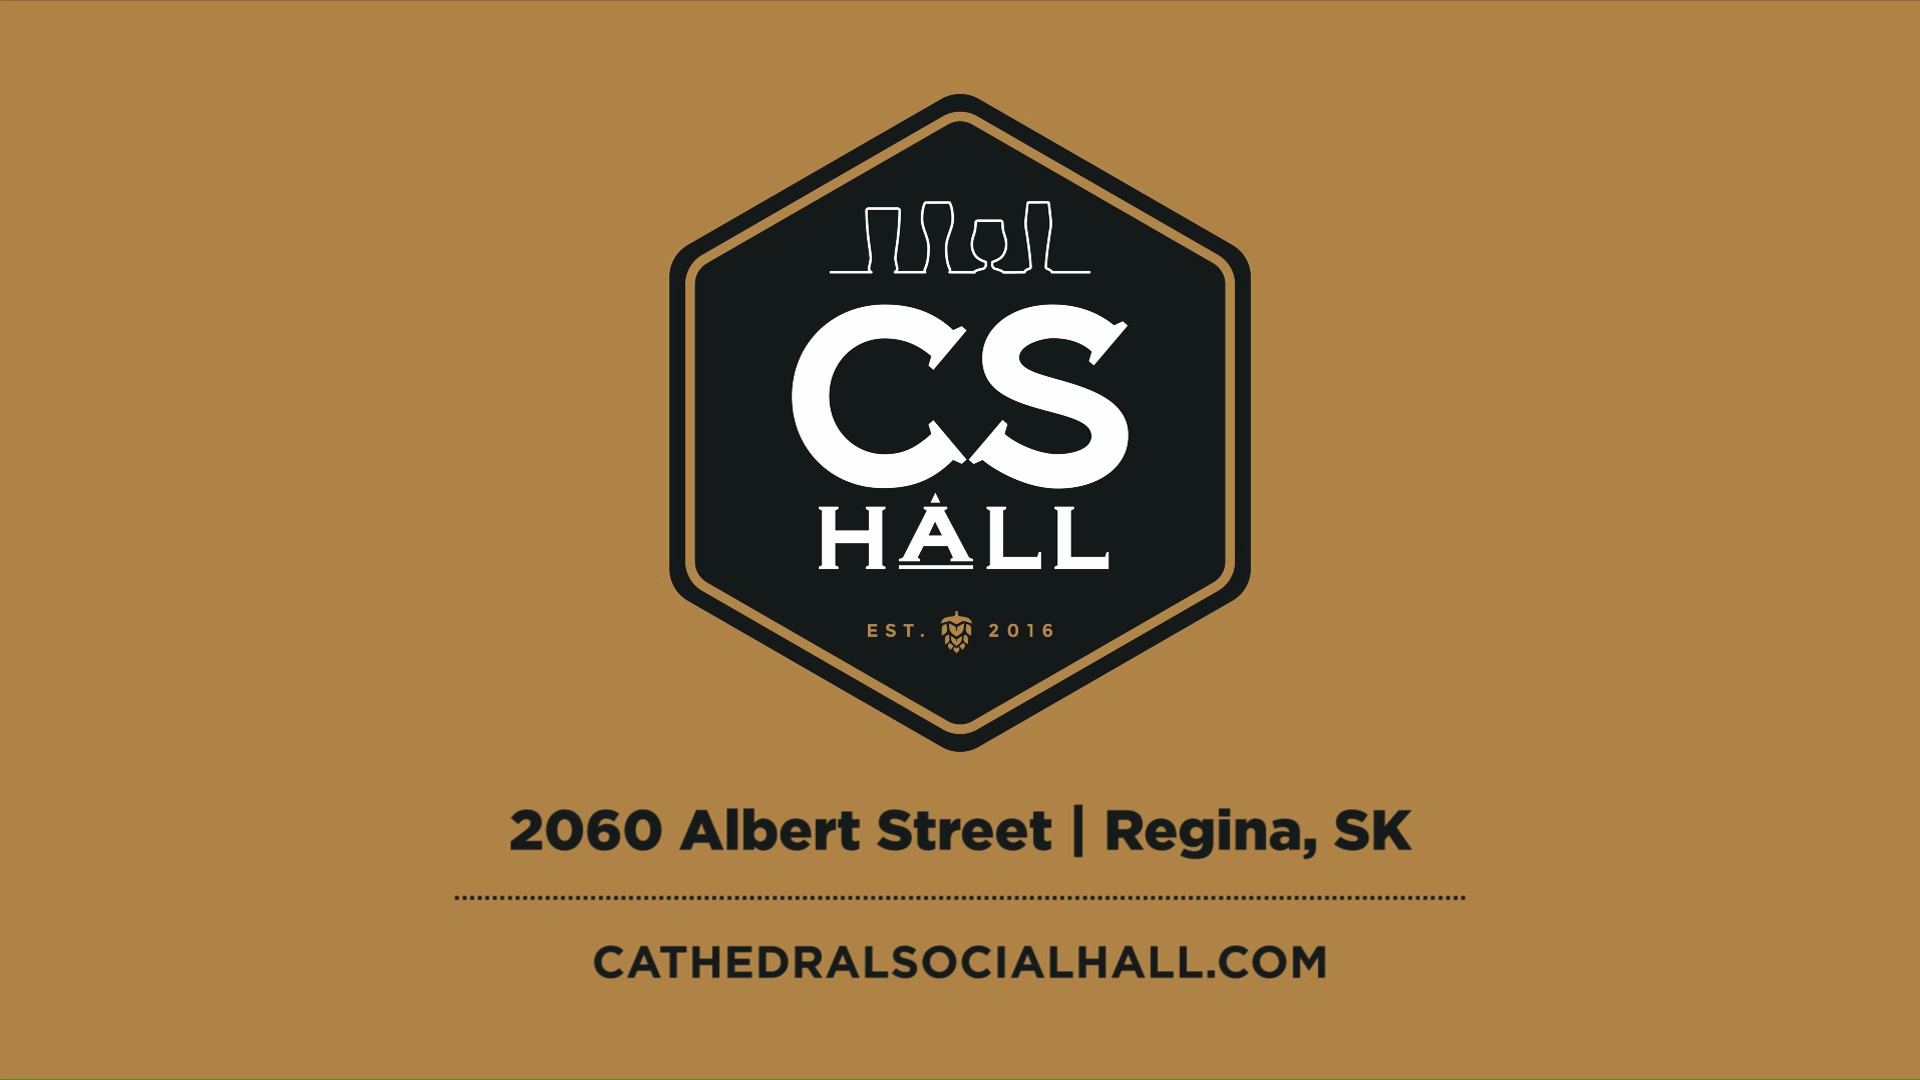 Cathedral Social Hall, Social, Cathedral Social Hall - Team - Matt, Portfolio Image, CS Hall. Established 2016.